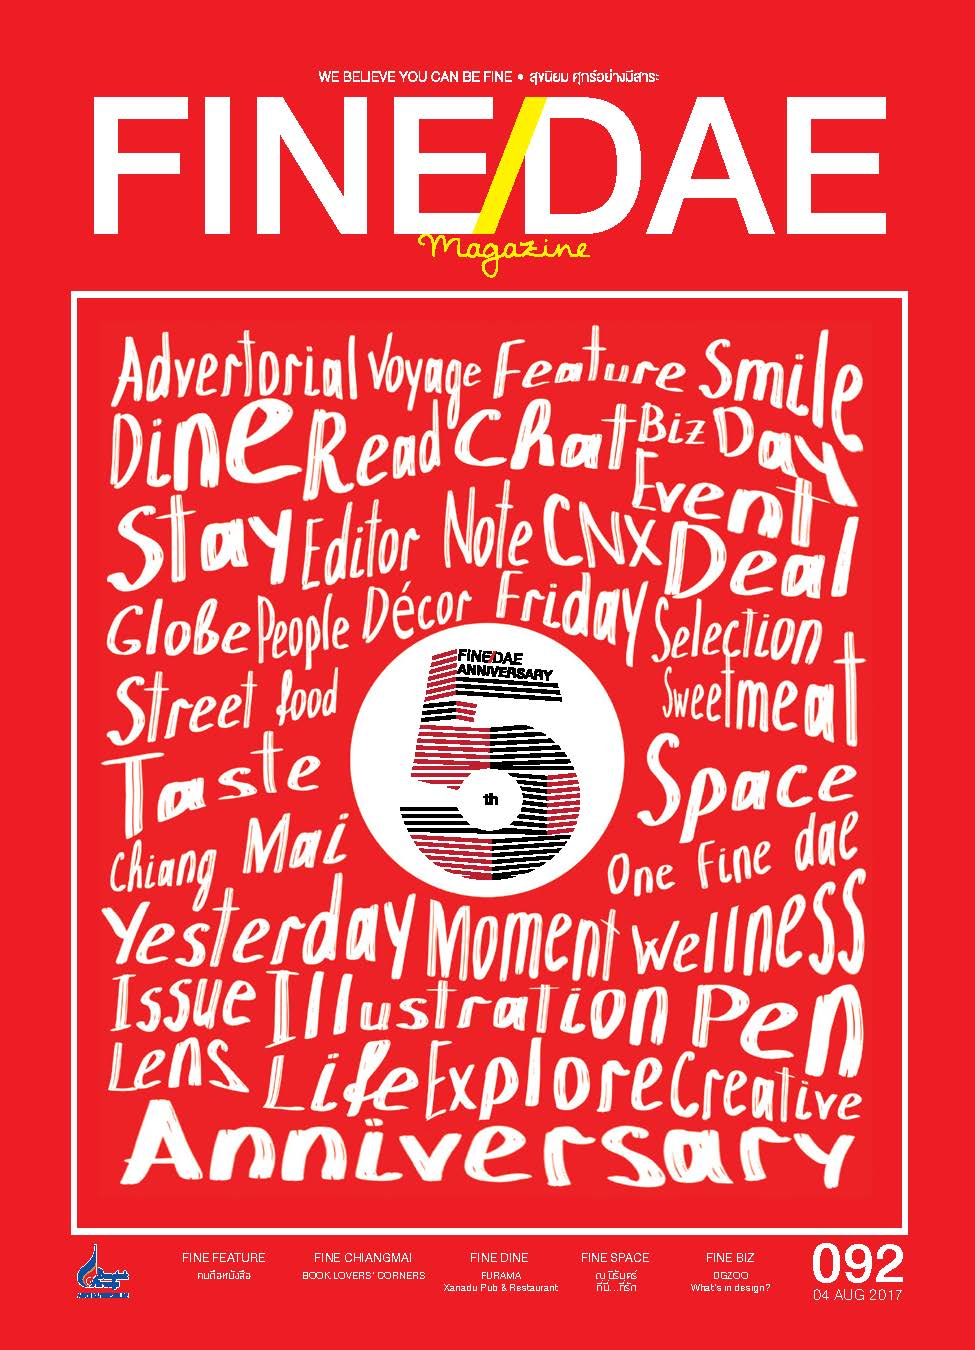 FINE DAE Magazine ISSUE 92